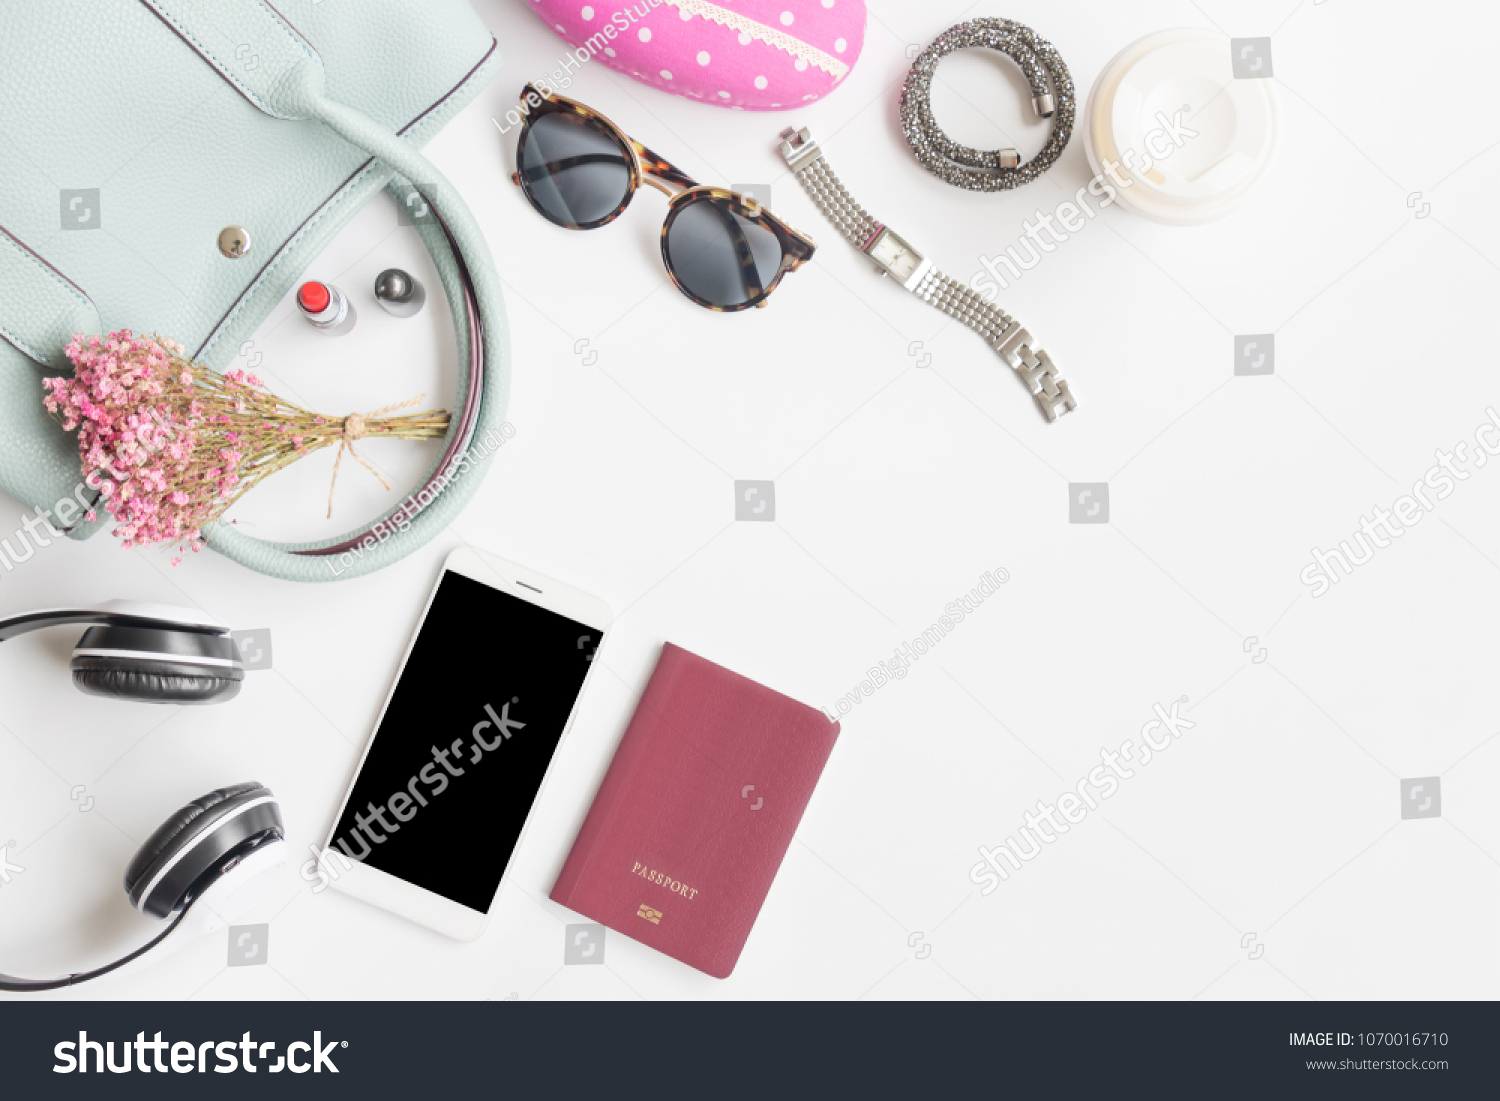 travel items for women